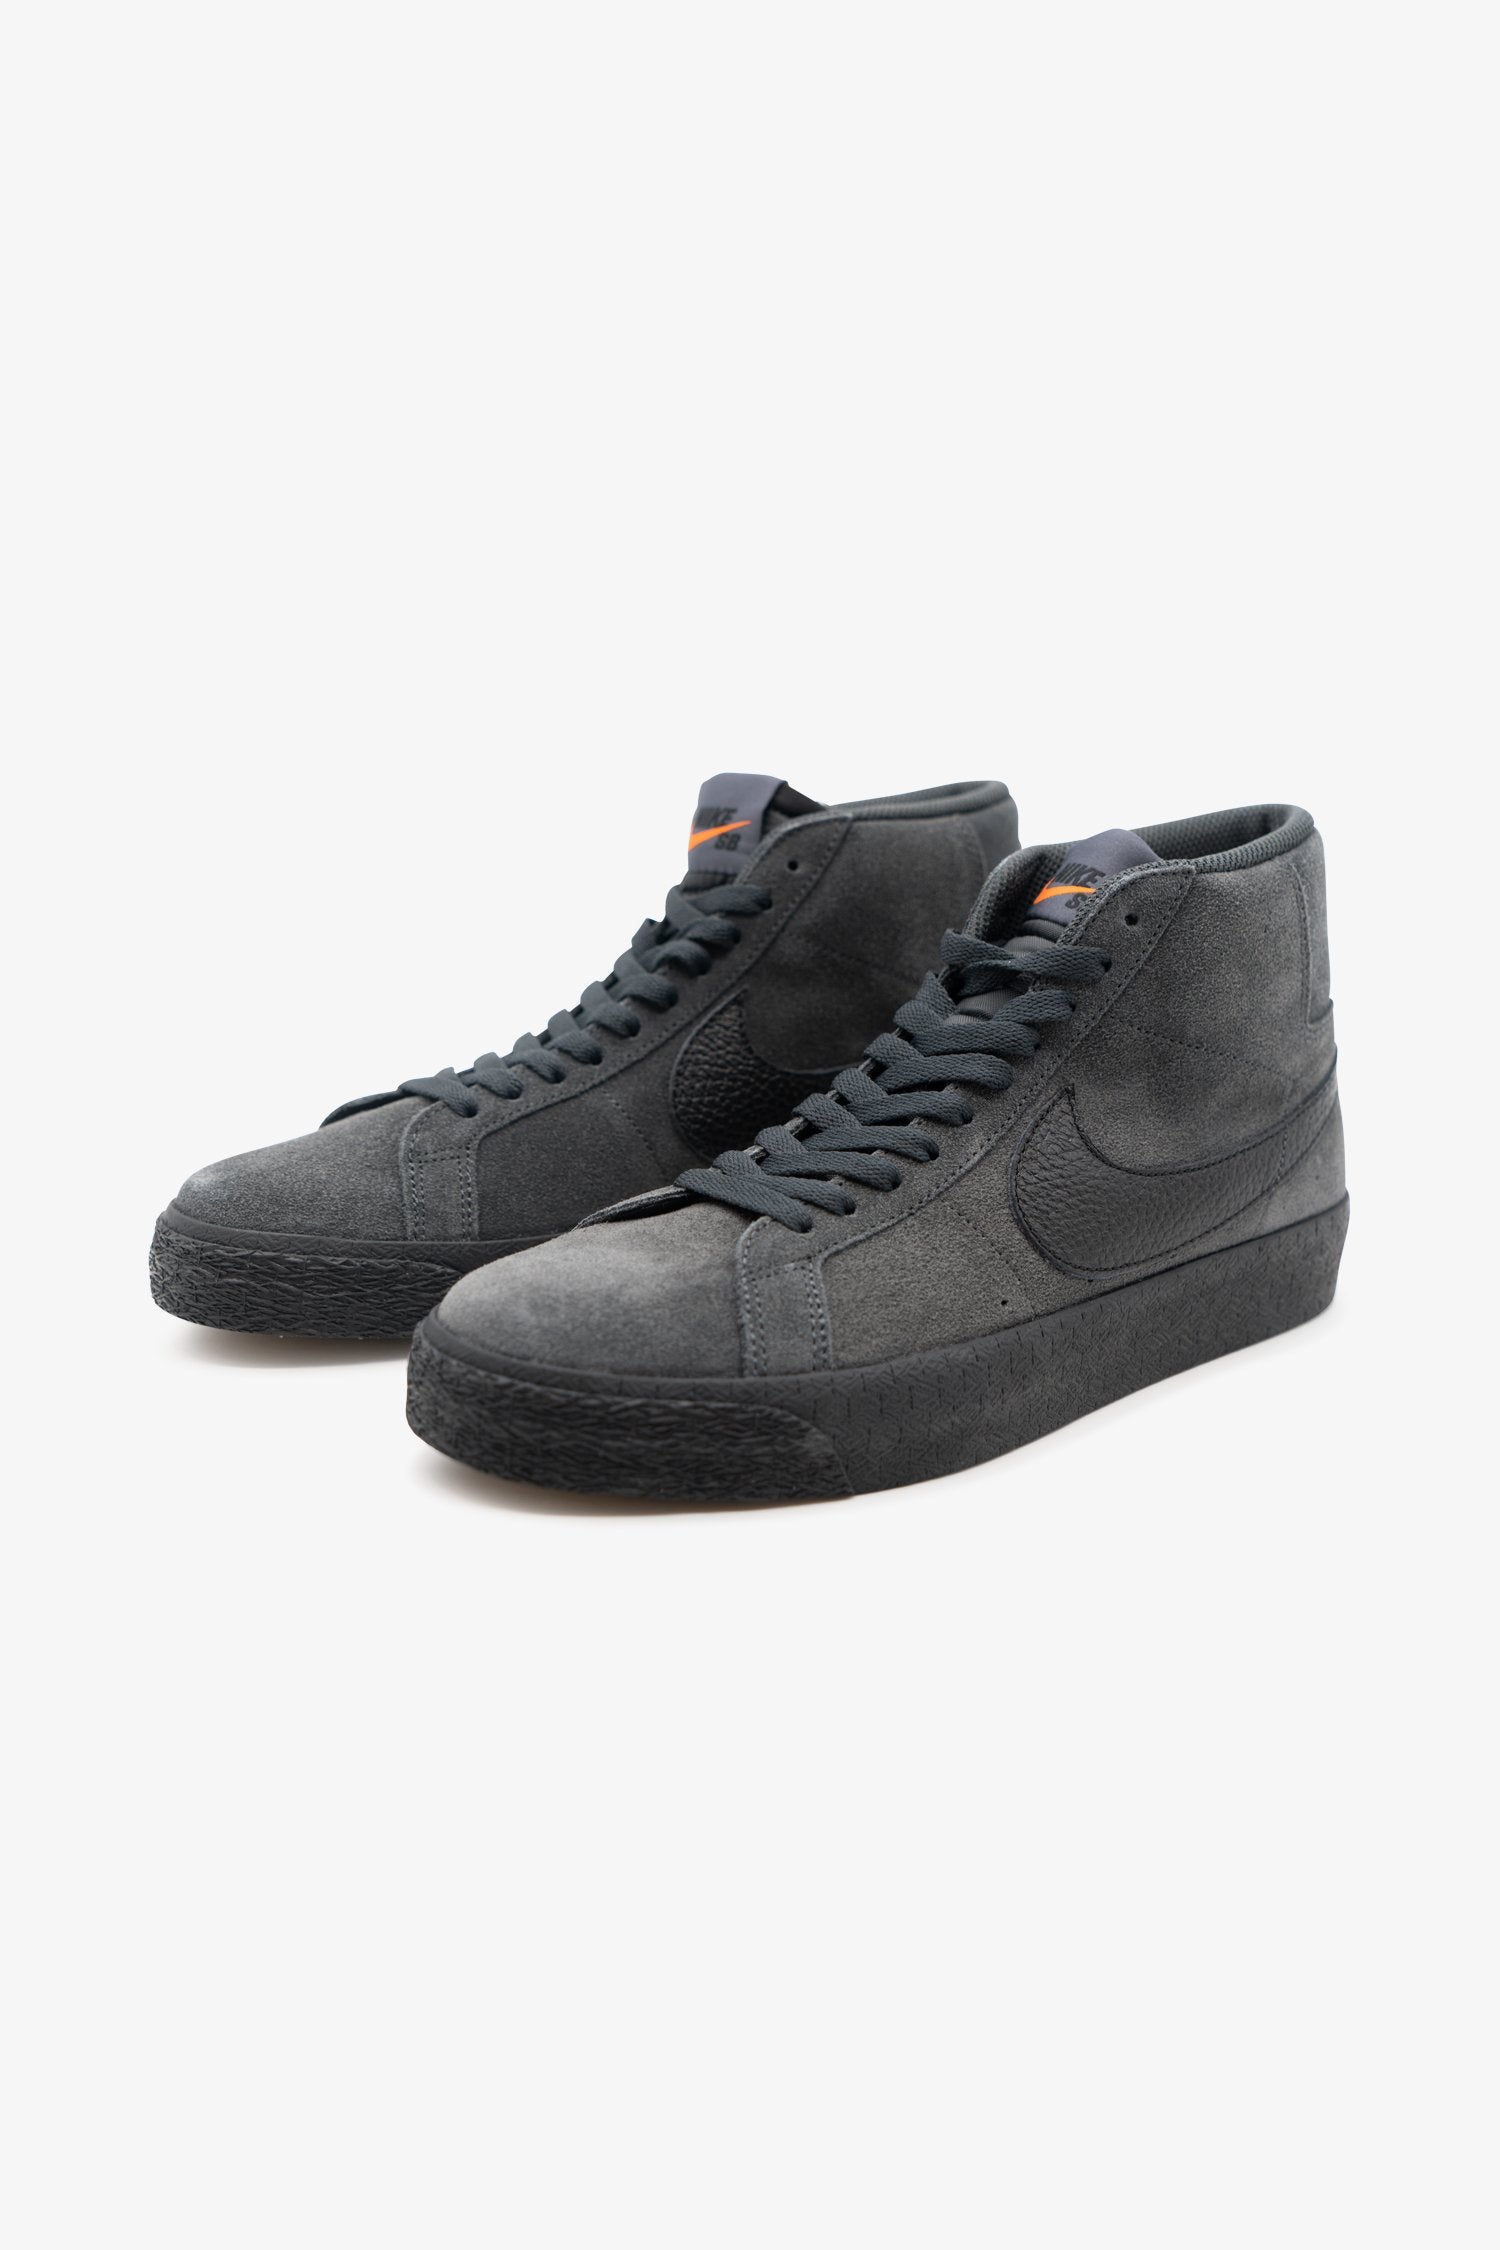 Selectshop FRAME - NIKE SB Nike SB Zoom Blazer Mid "Dark Smoke" Footwear Dubai